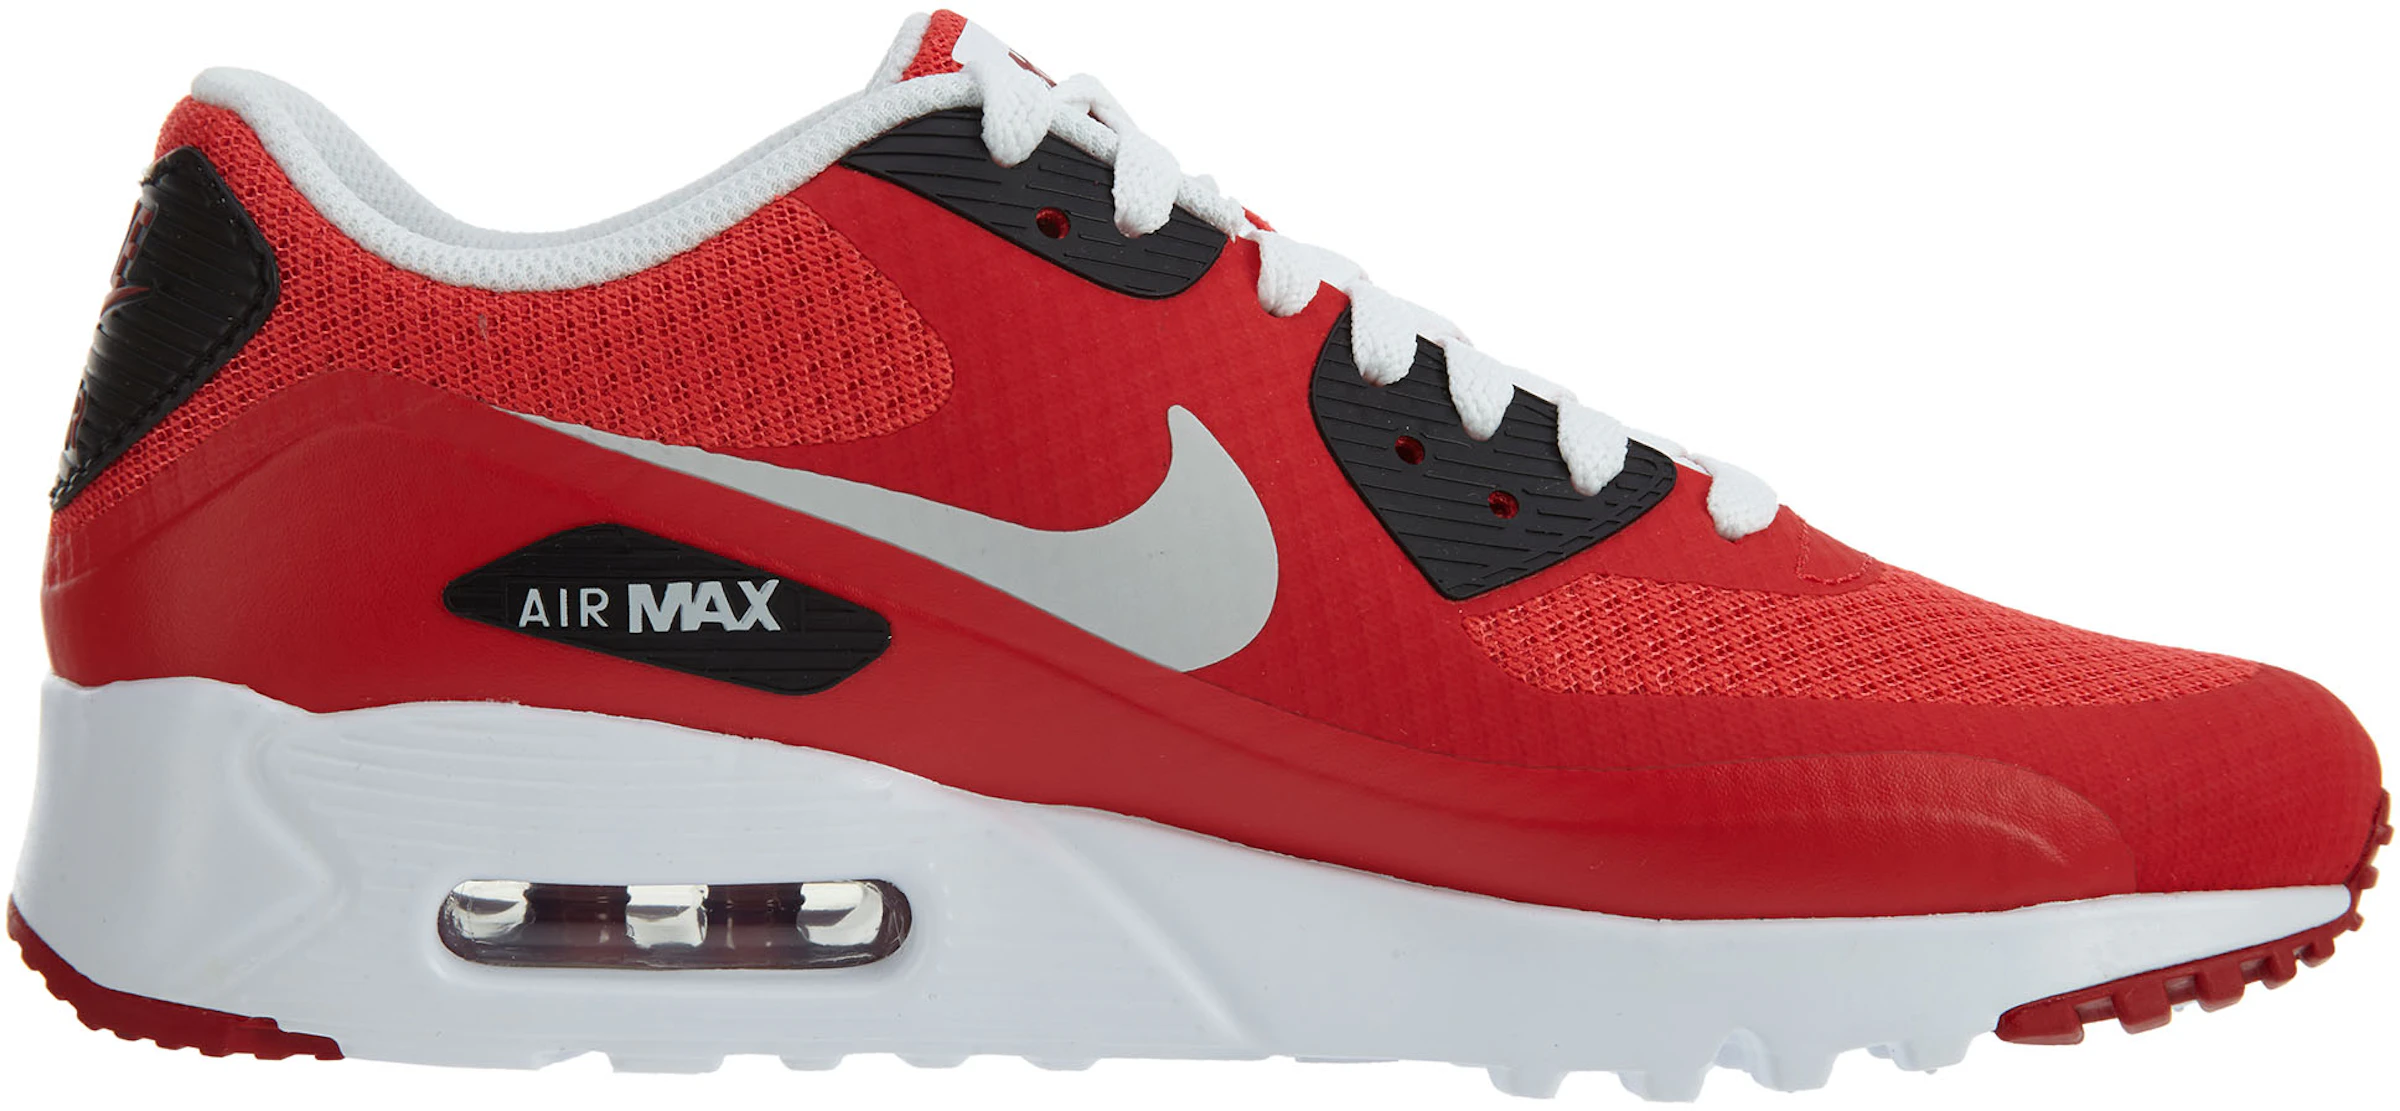 Característica policía Millas Nike Air Max 90 Ultra Essential Action Red/Pure Platinum-Gym Red-Black -  819474-600 - ES